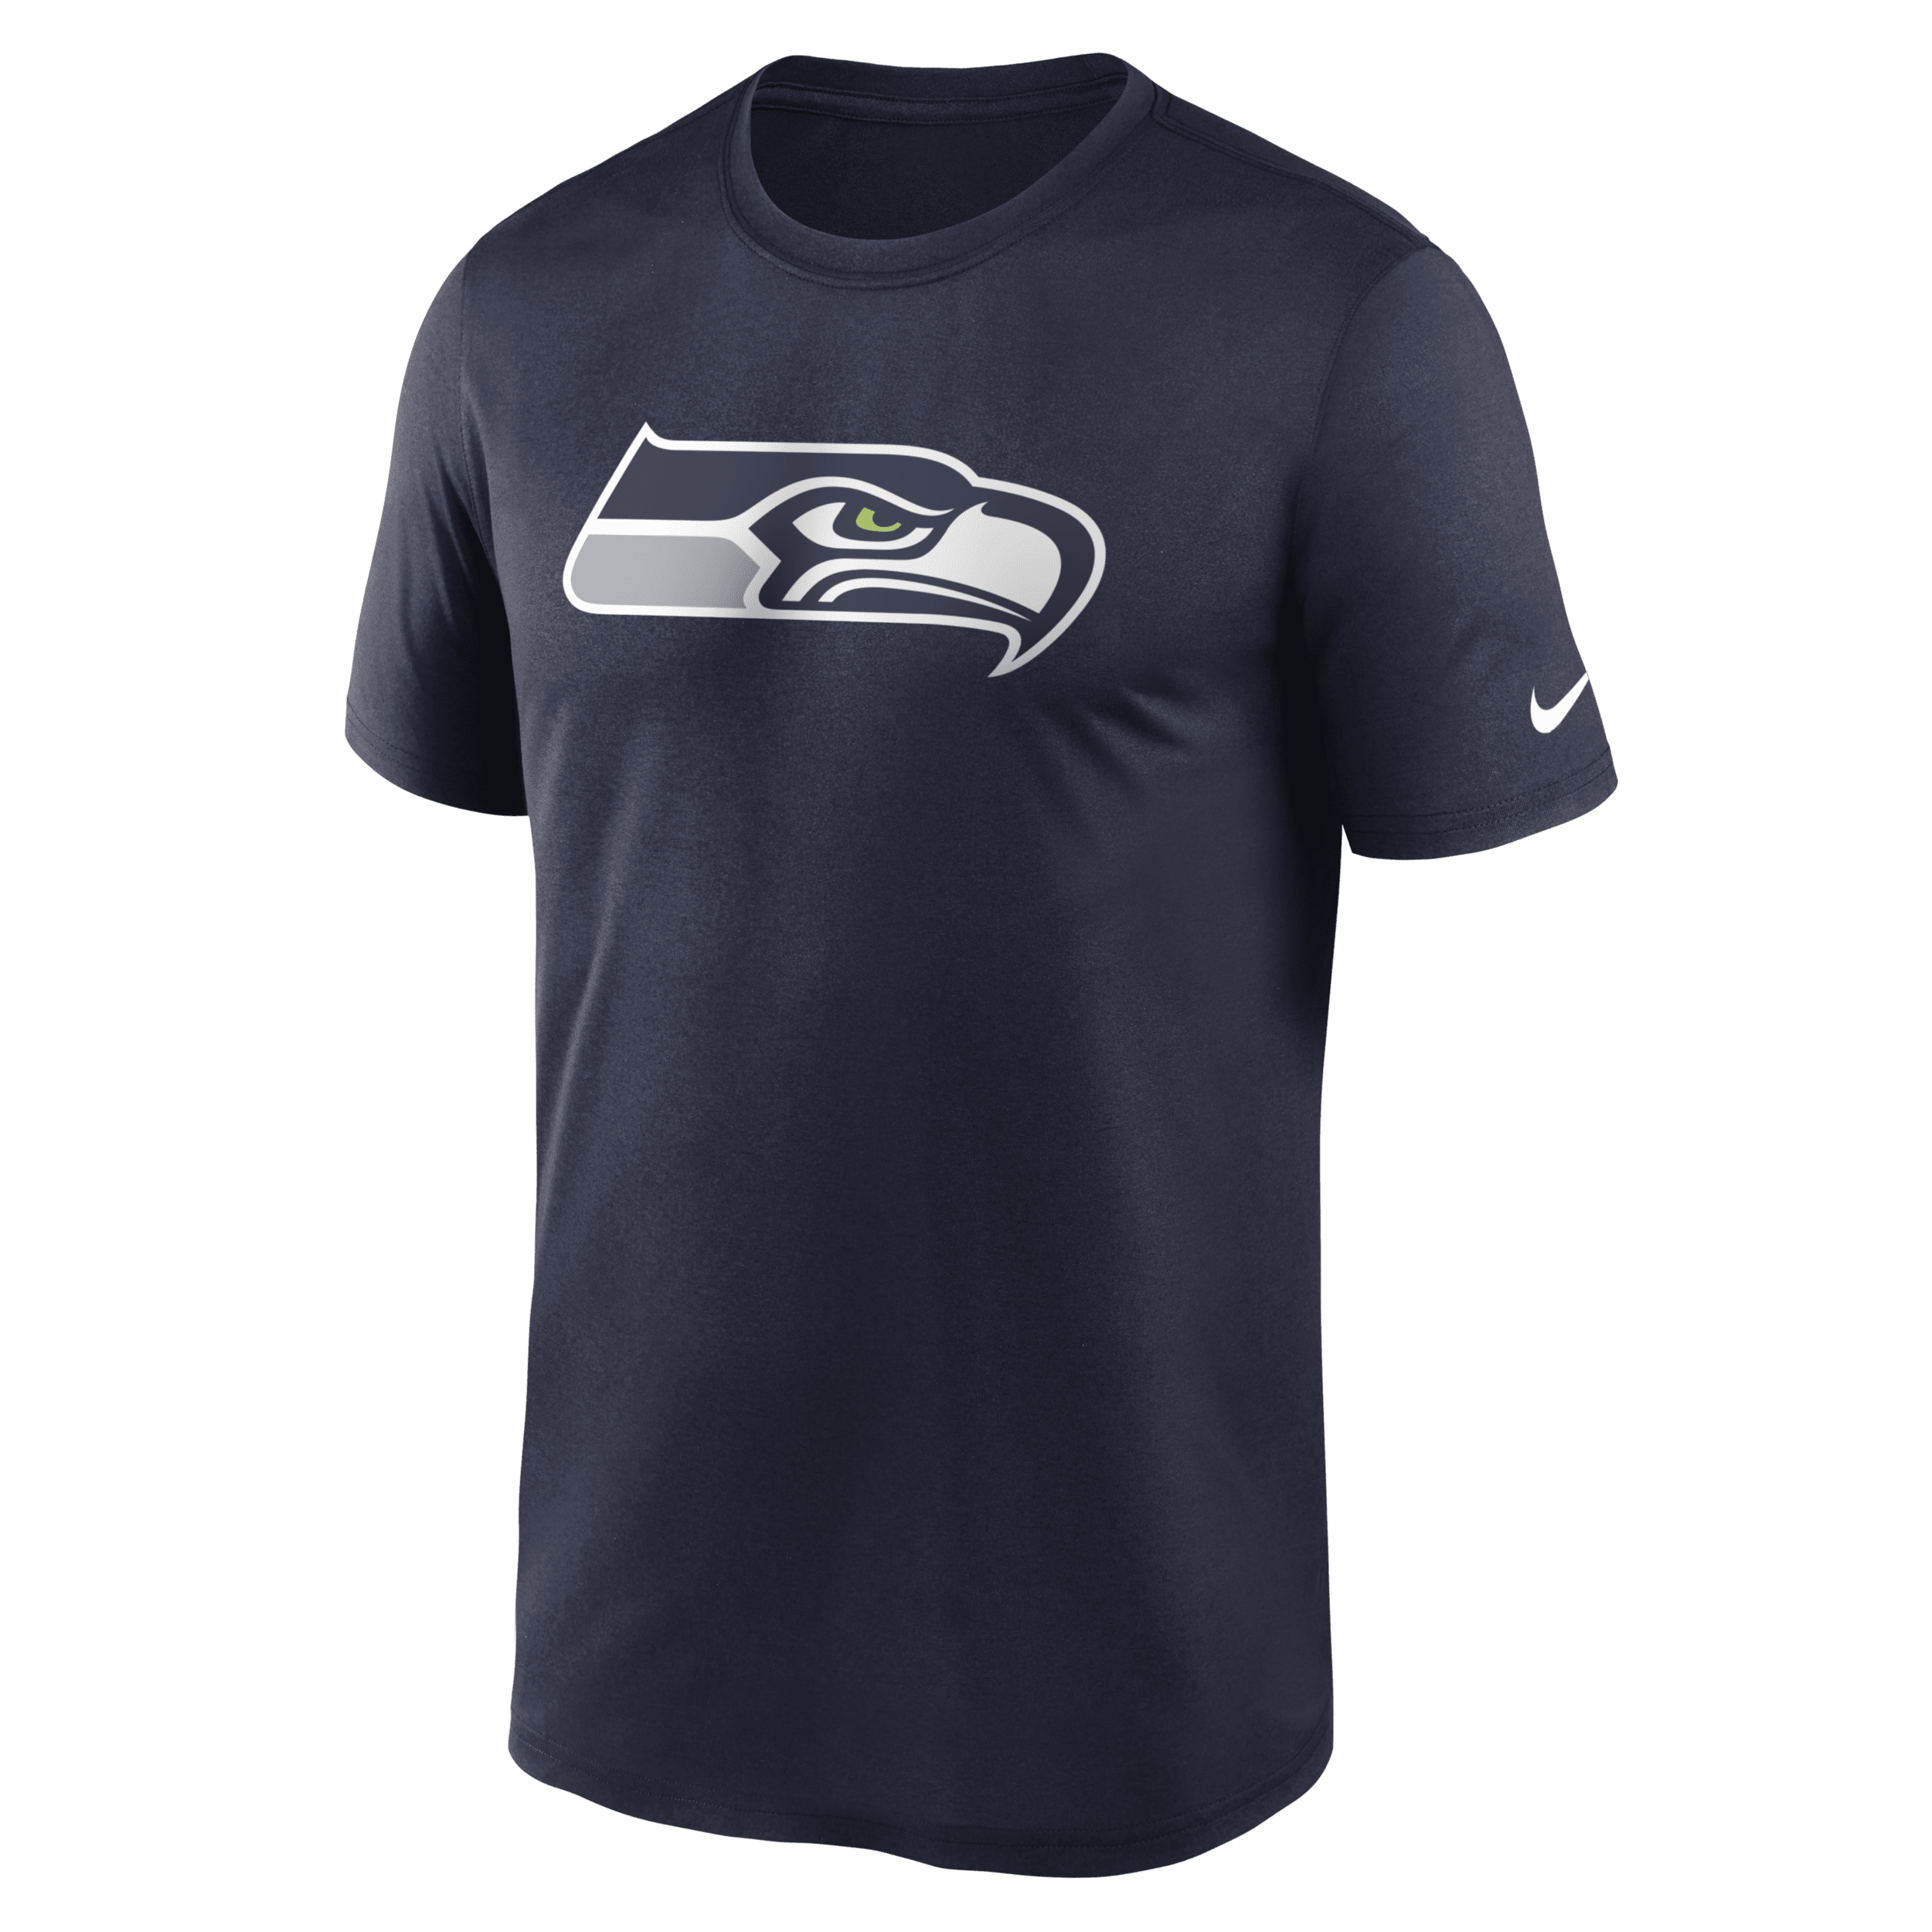 Nike Dri-FIT Logo Legend (NFL Seattle Seahawks) T-shirt voor heren - Zwart